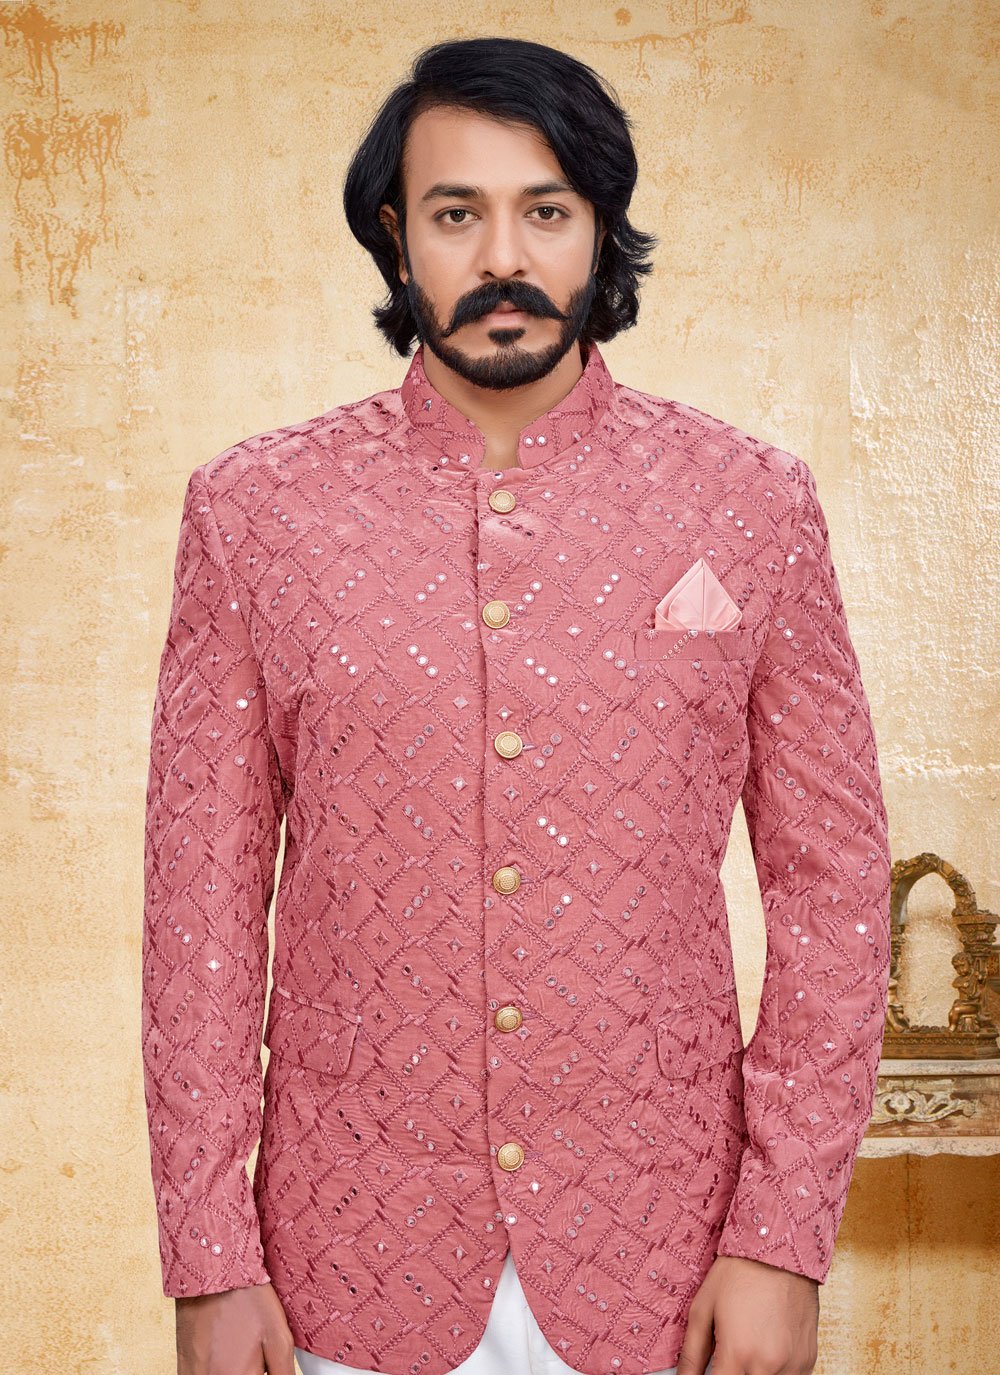 Jodhpuri Suit Velvet Pink Embroidered Mens